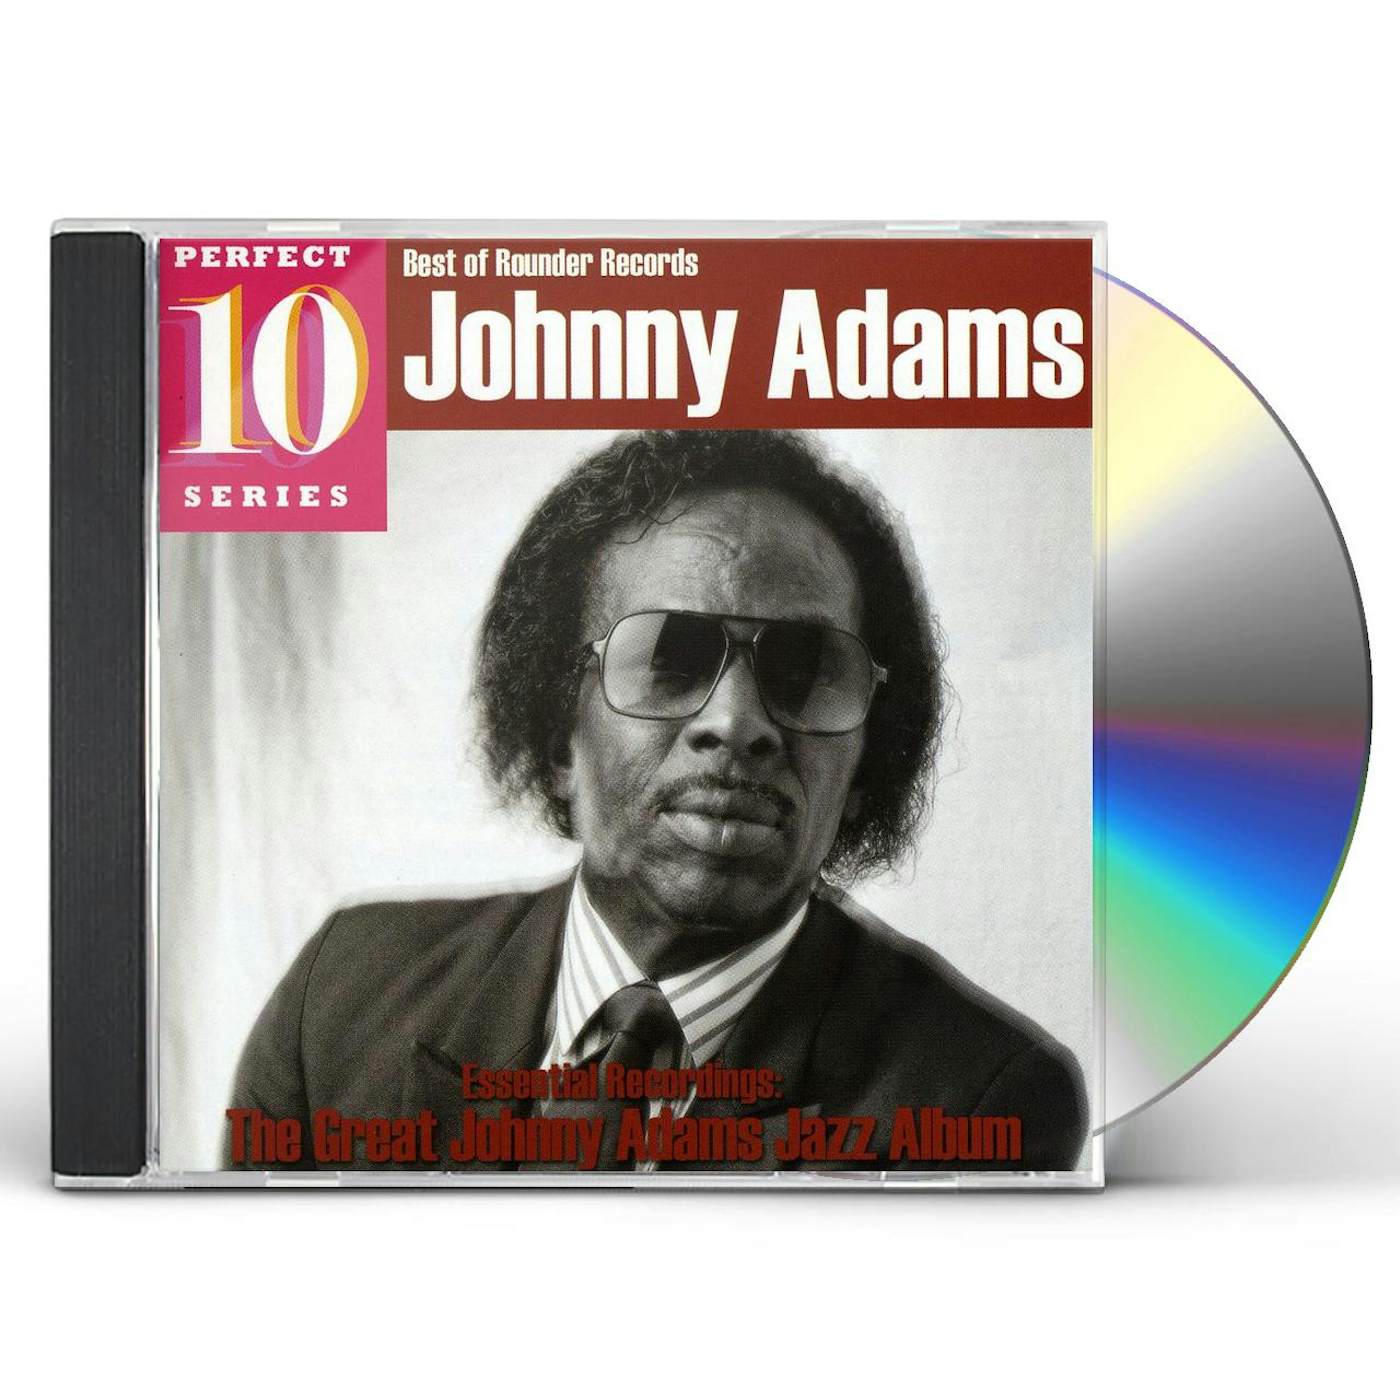 ESSENTIAL RECORDINGS: GREAT JOHNNY ADAMS JAZZ ALB CD